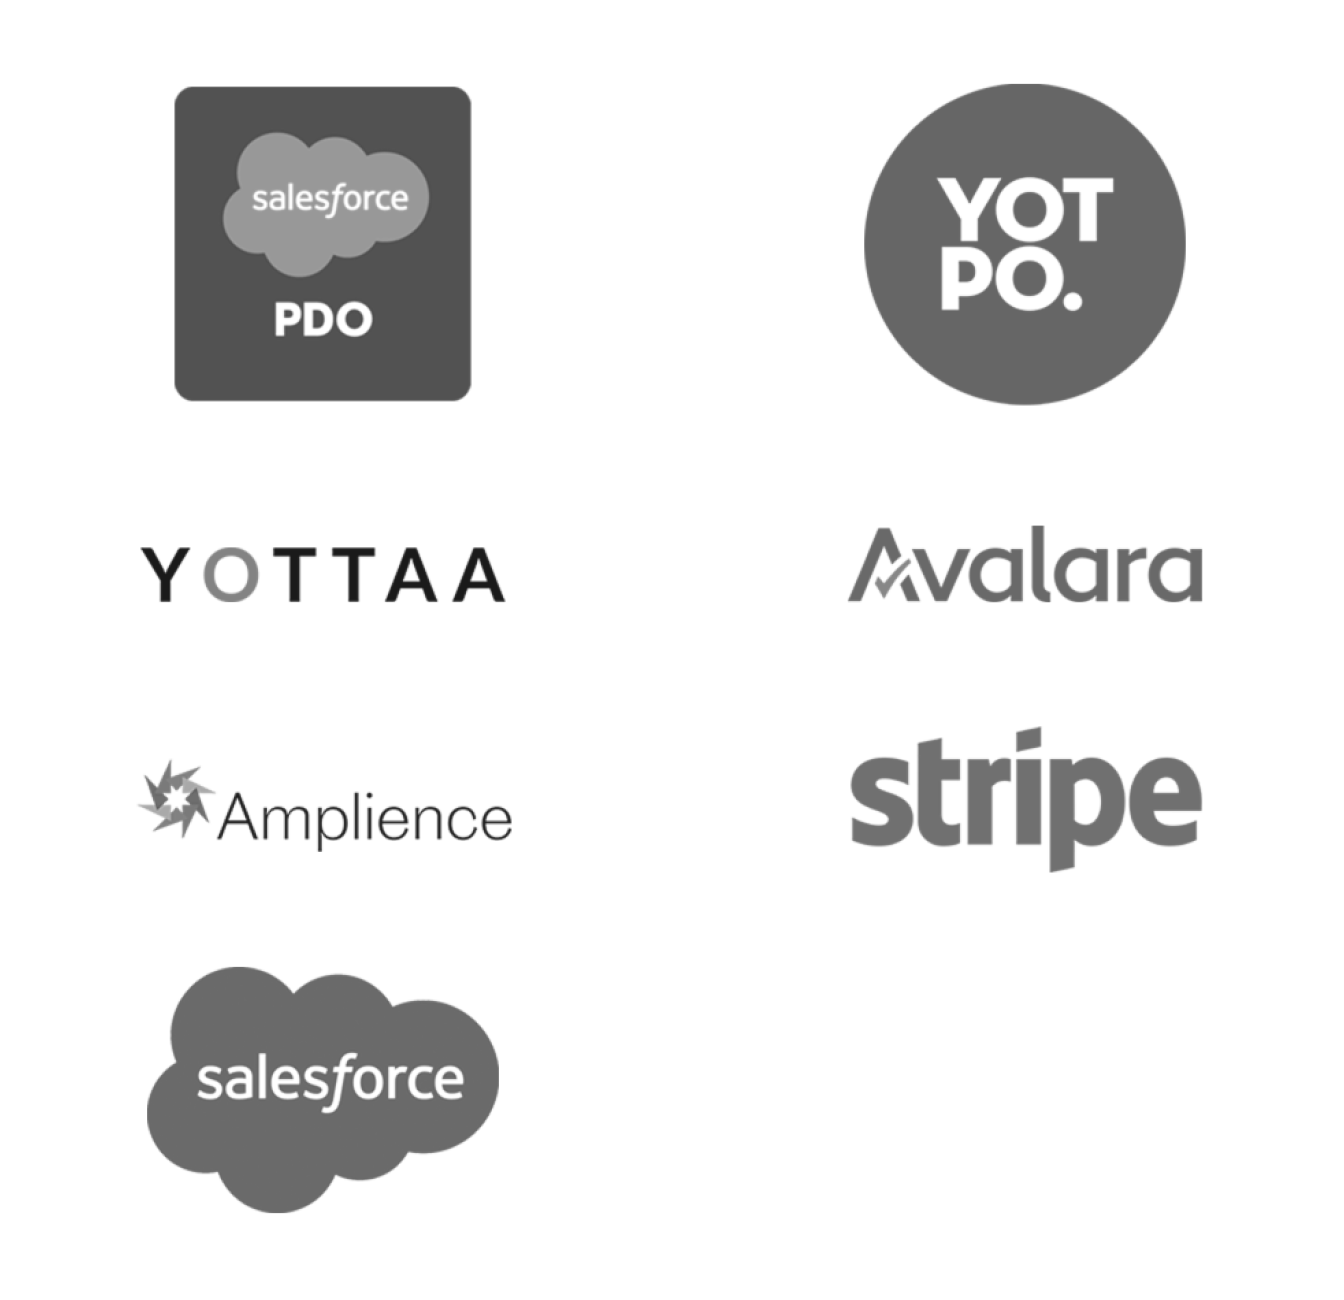 Logos for Salesforce PDO, Yotpo, Yottaa, Avalara, Amplience, Stripe, and Salesforce